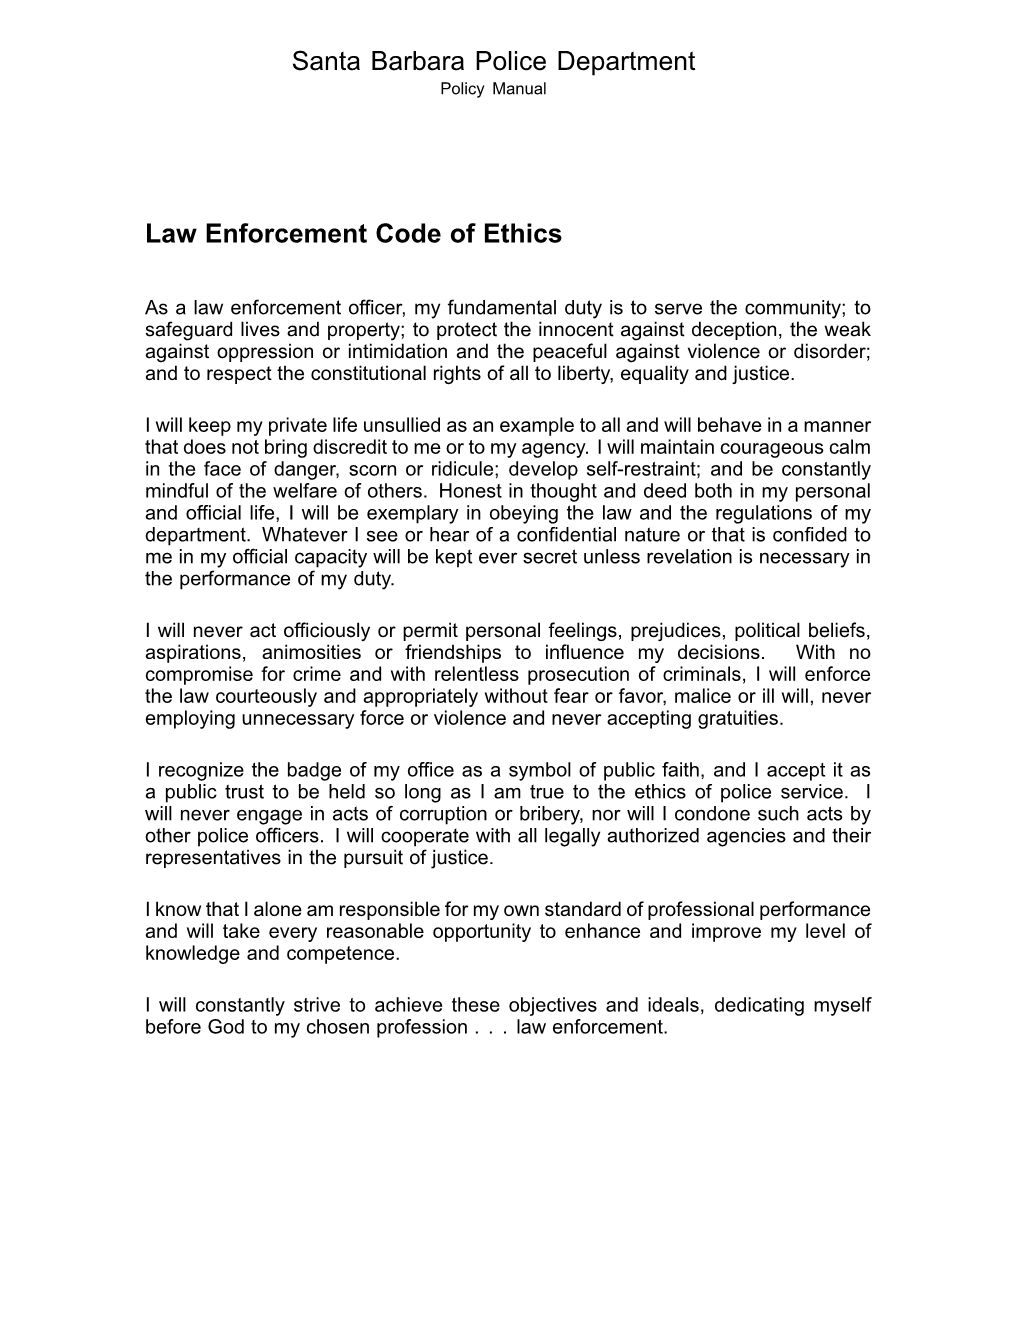 Santa Barbara Police Department Law Enforcement Code of Ethics